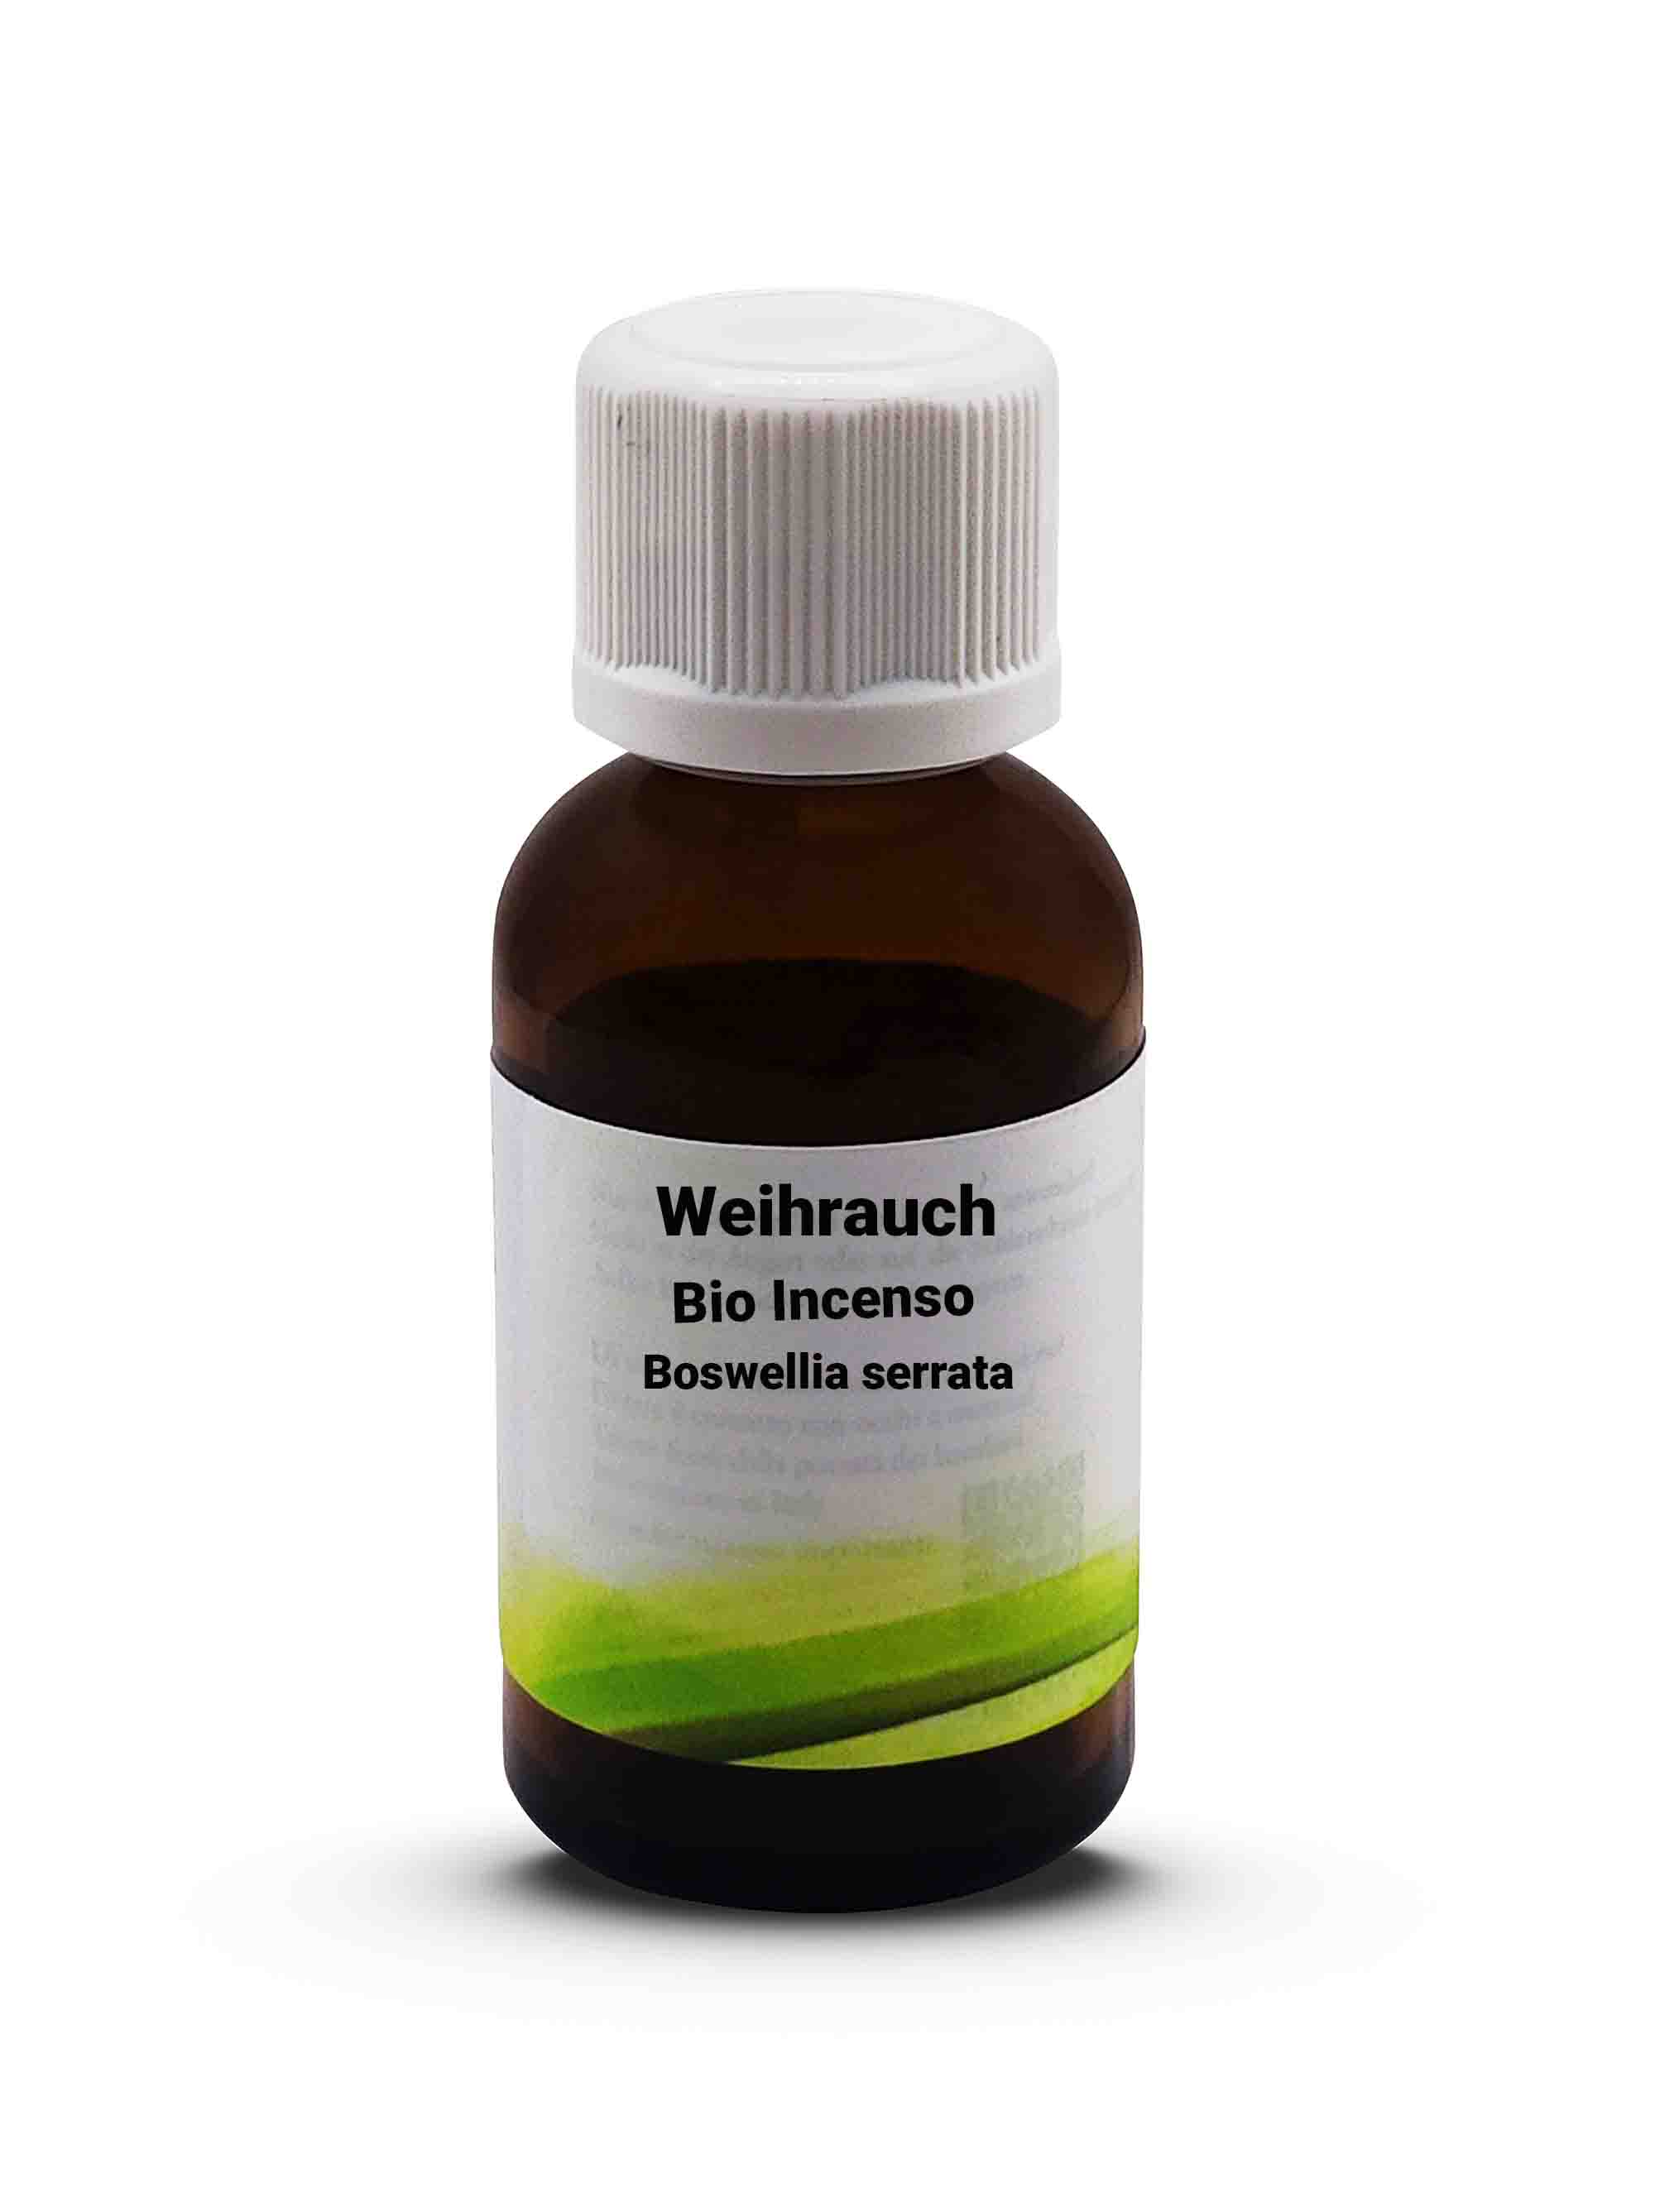 Weihrauch Bio Incenso - Boswellia serrata 30 ml